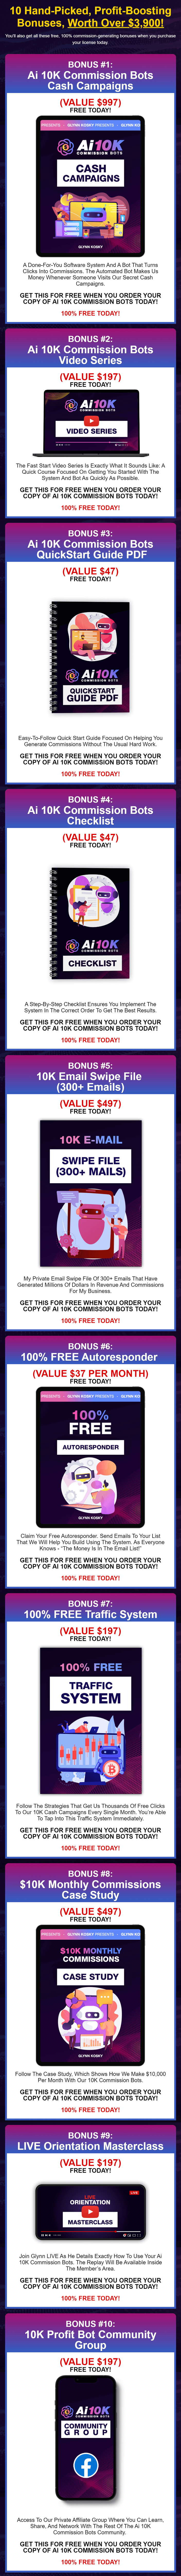 AI-10K-Commission-Bots-Review-Bonuses